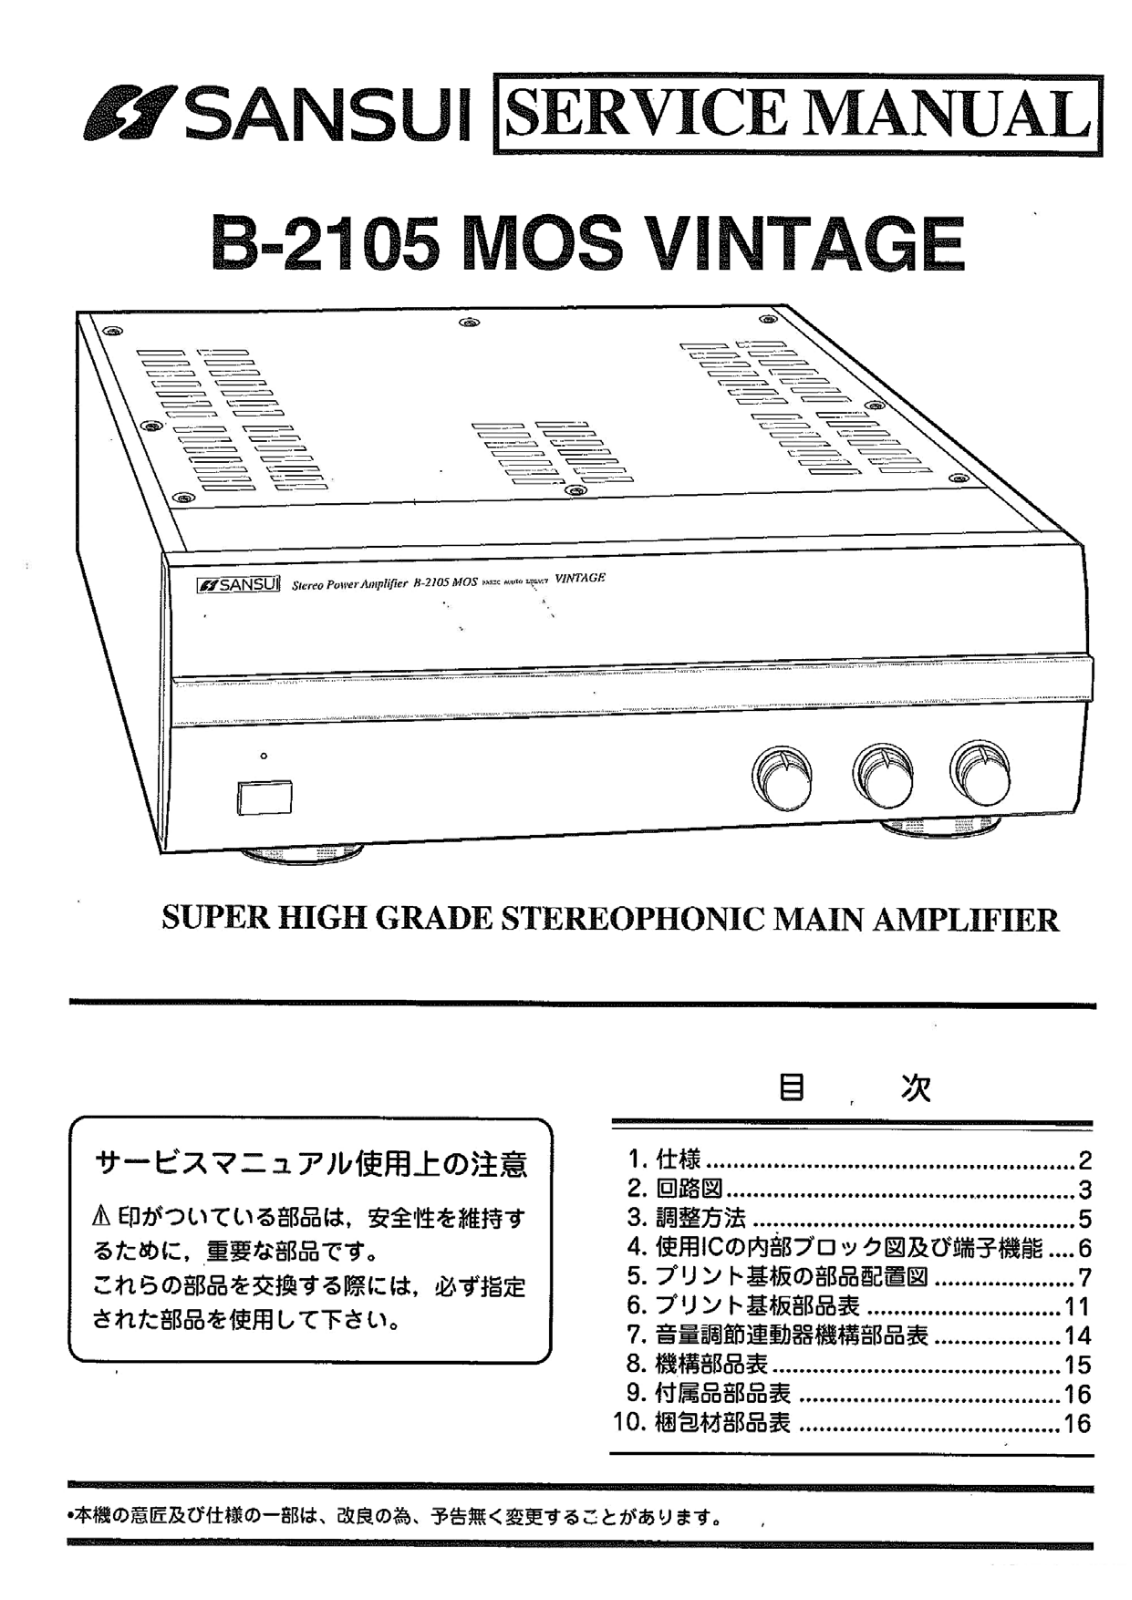 Sansui B-2105 Service Manual